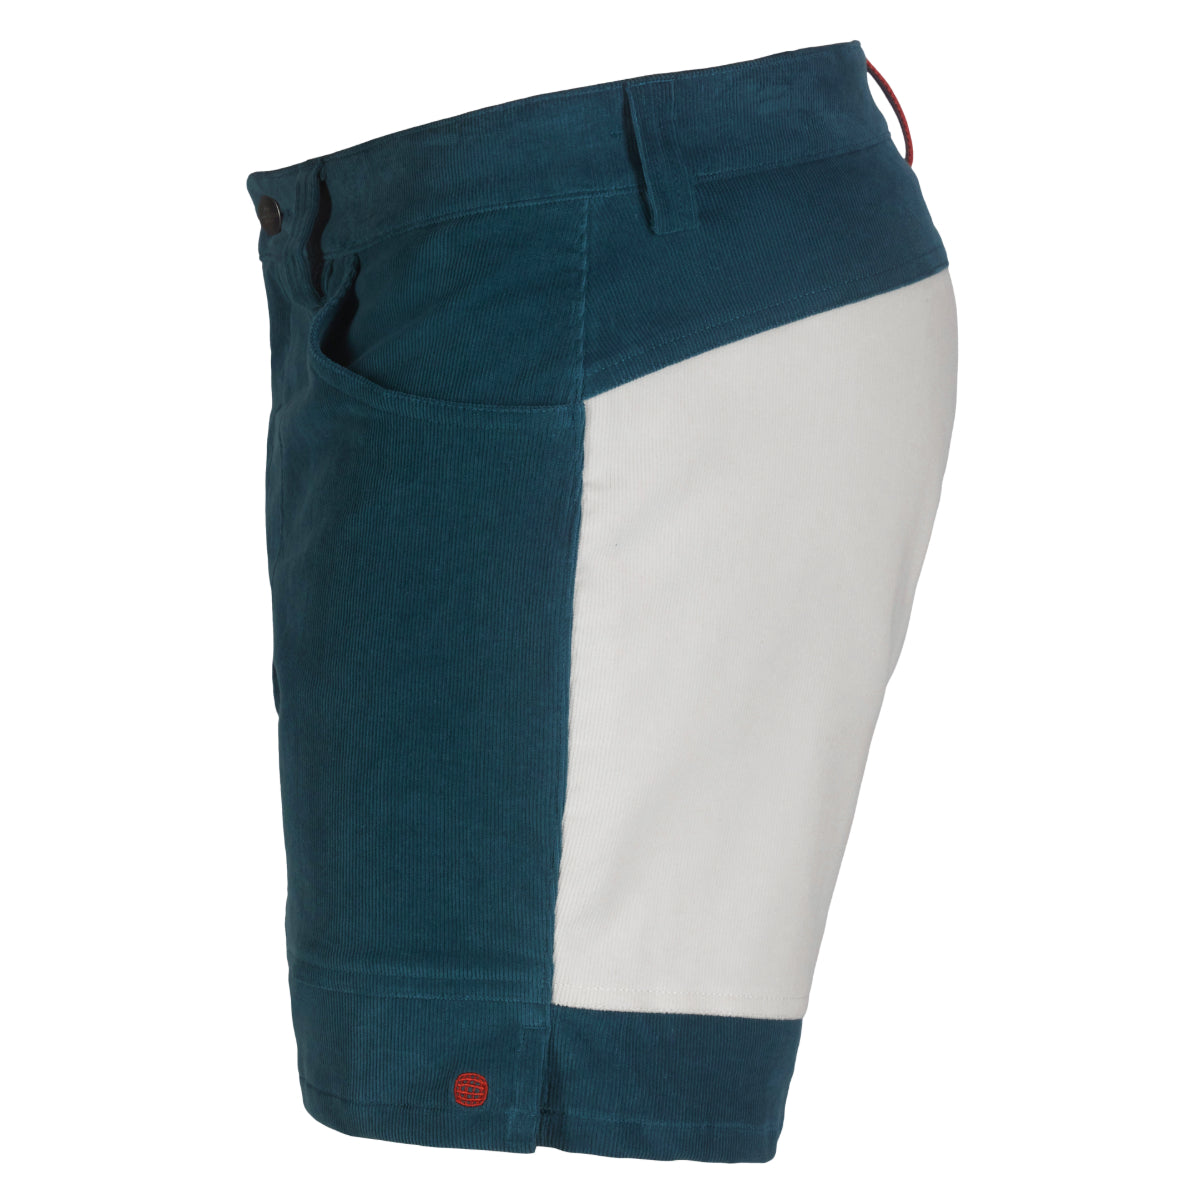 Amundsen Sports - Men's 7 Incher Concord Shorts - Elemental Blue  / Natural